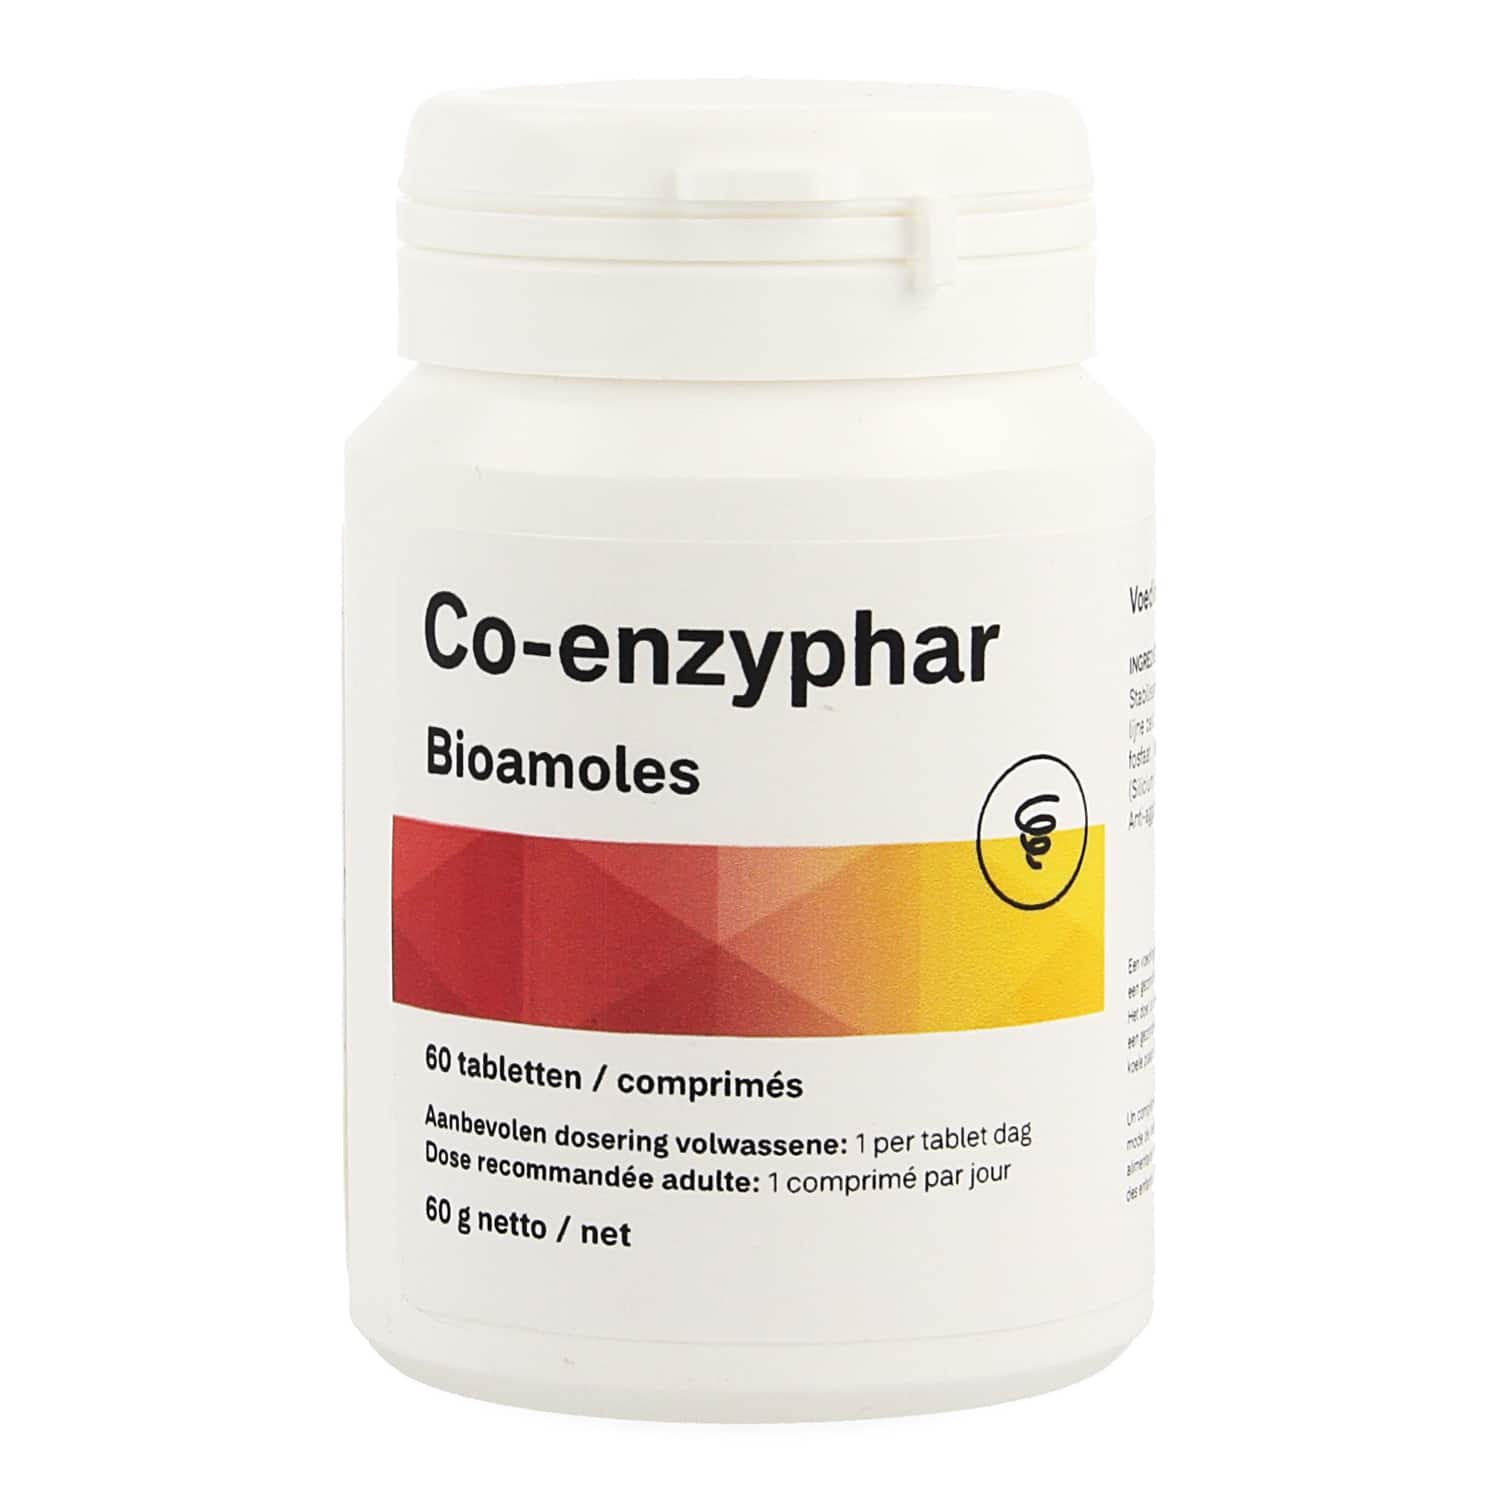 Bioamoles Co-enzyphar